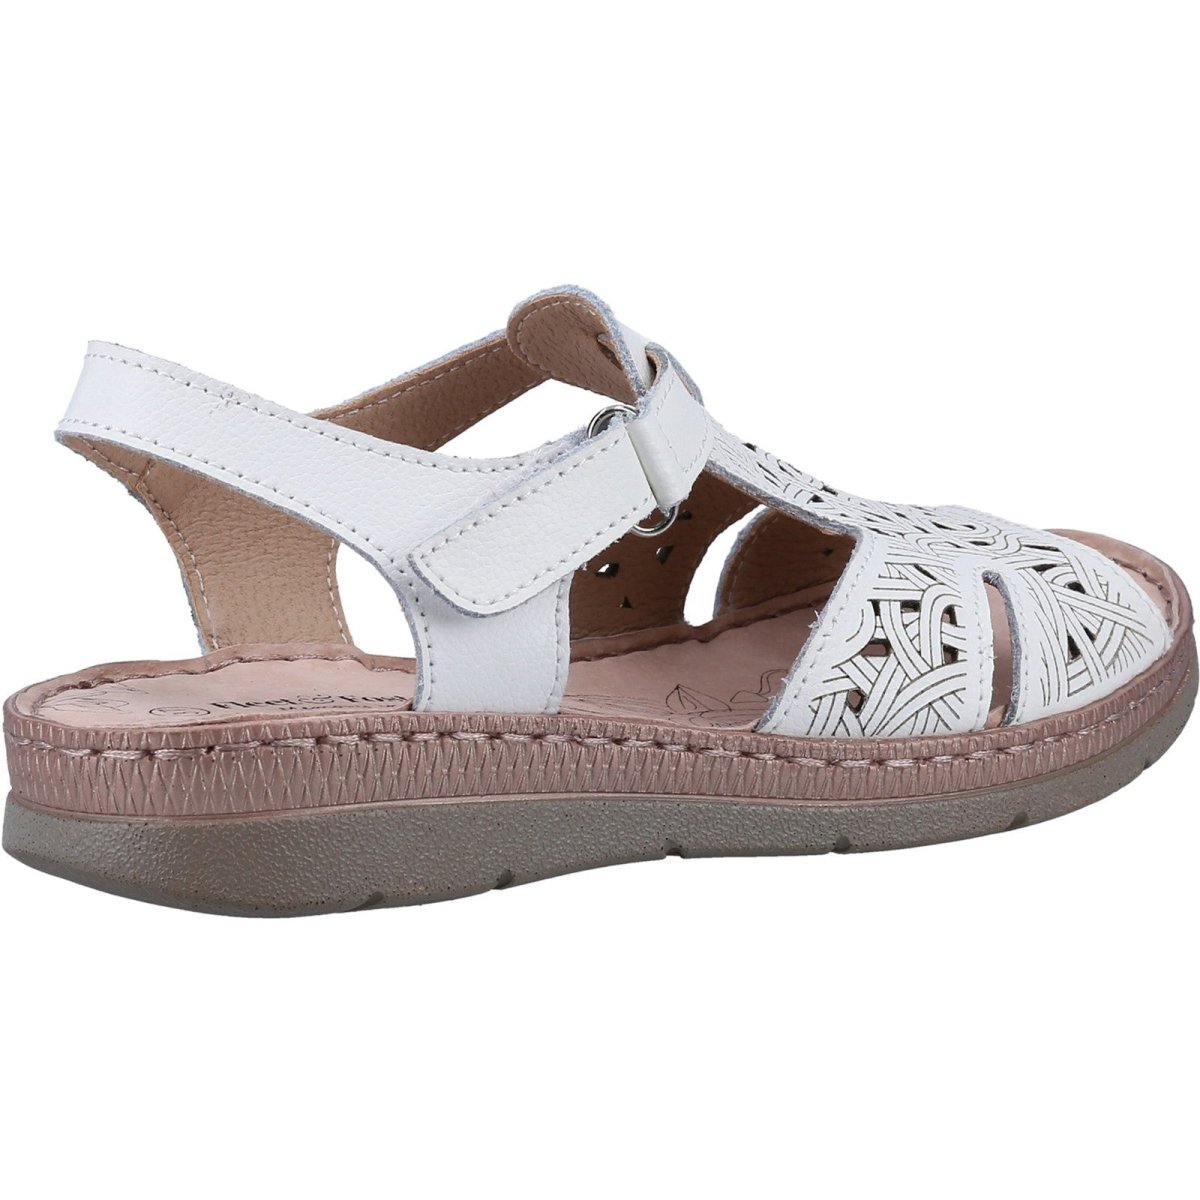 Fleet & Foster Ruth Ladies Open-Toe Summer Sandals - Shoe Store Direct